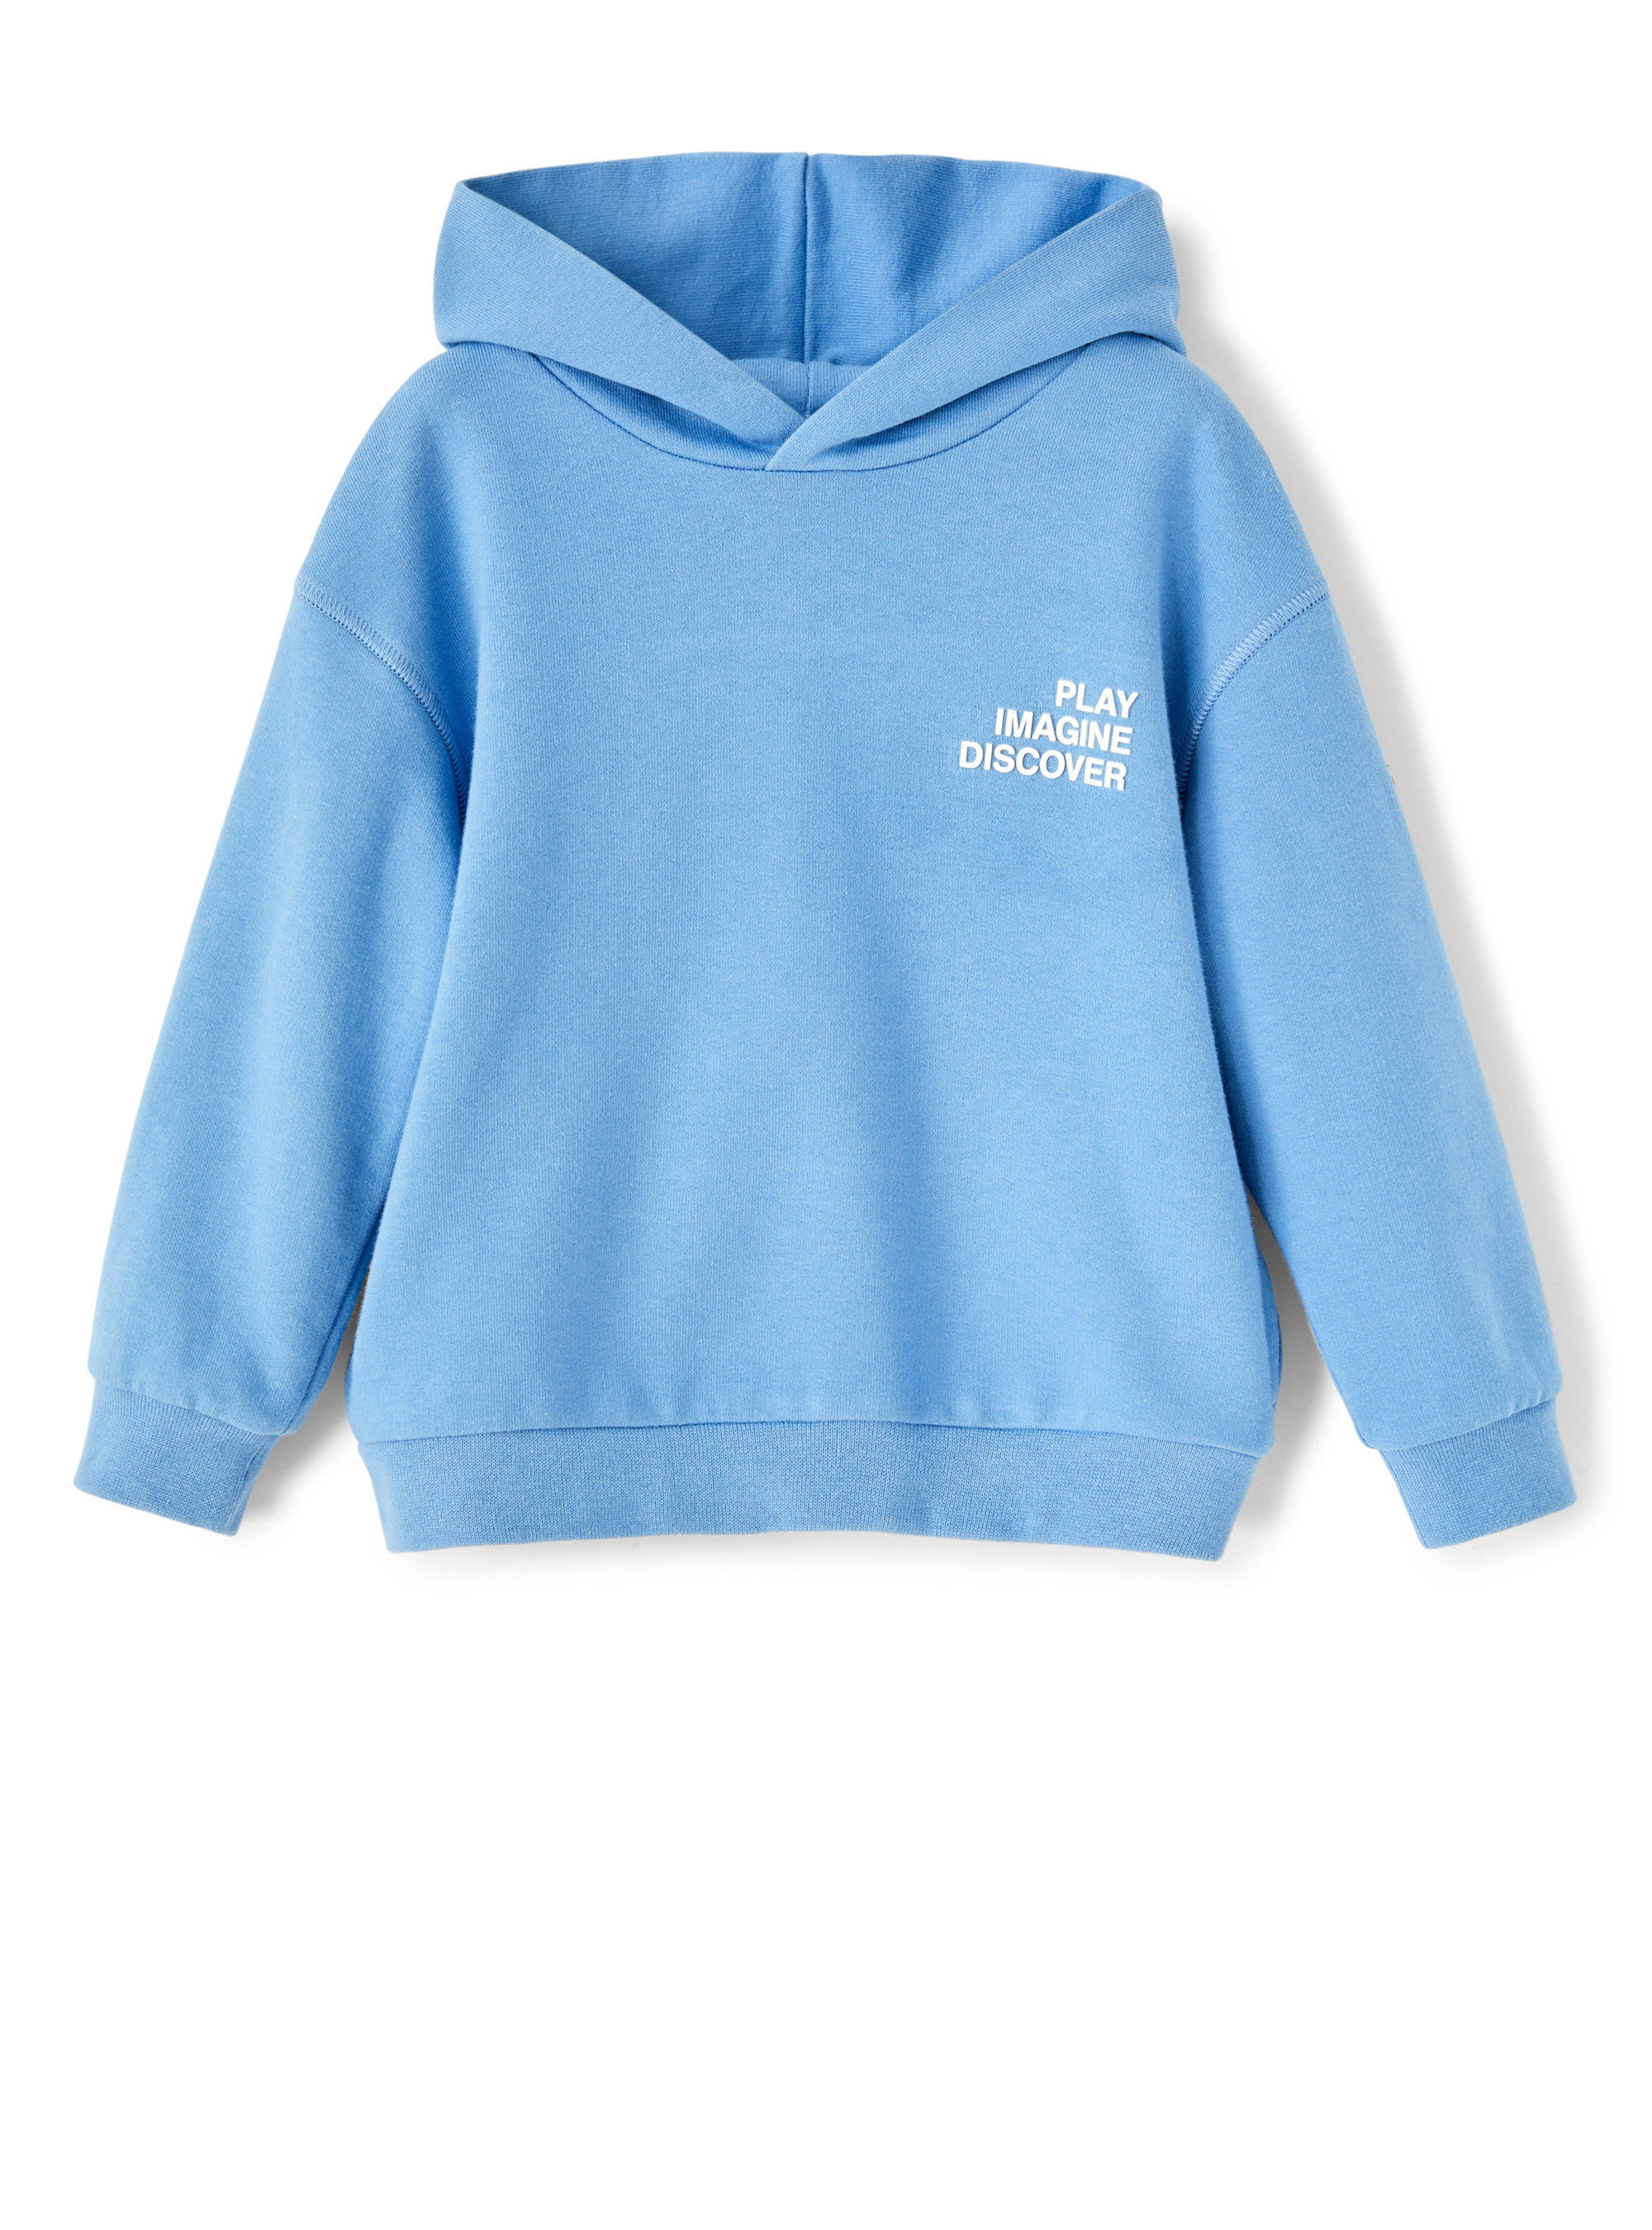 Sweatshirt with hood and printed sentence - Blue | Il Gufo